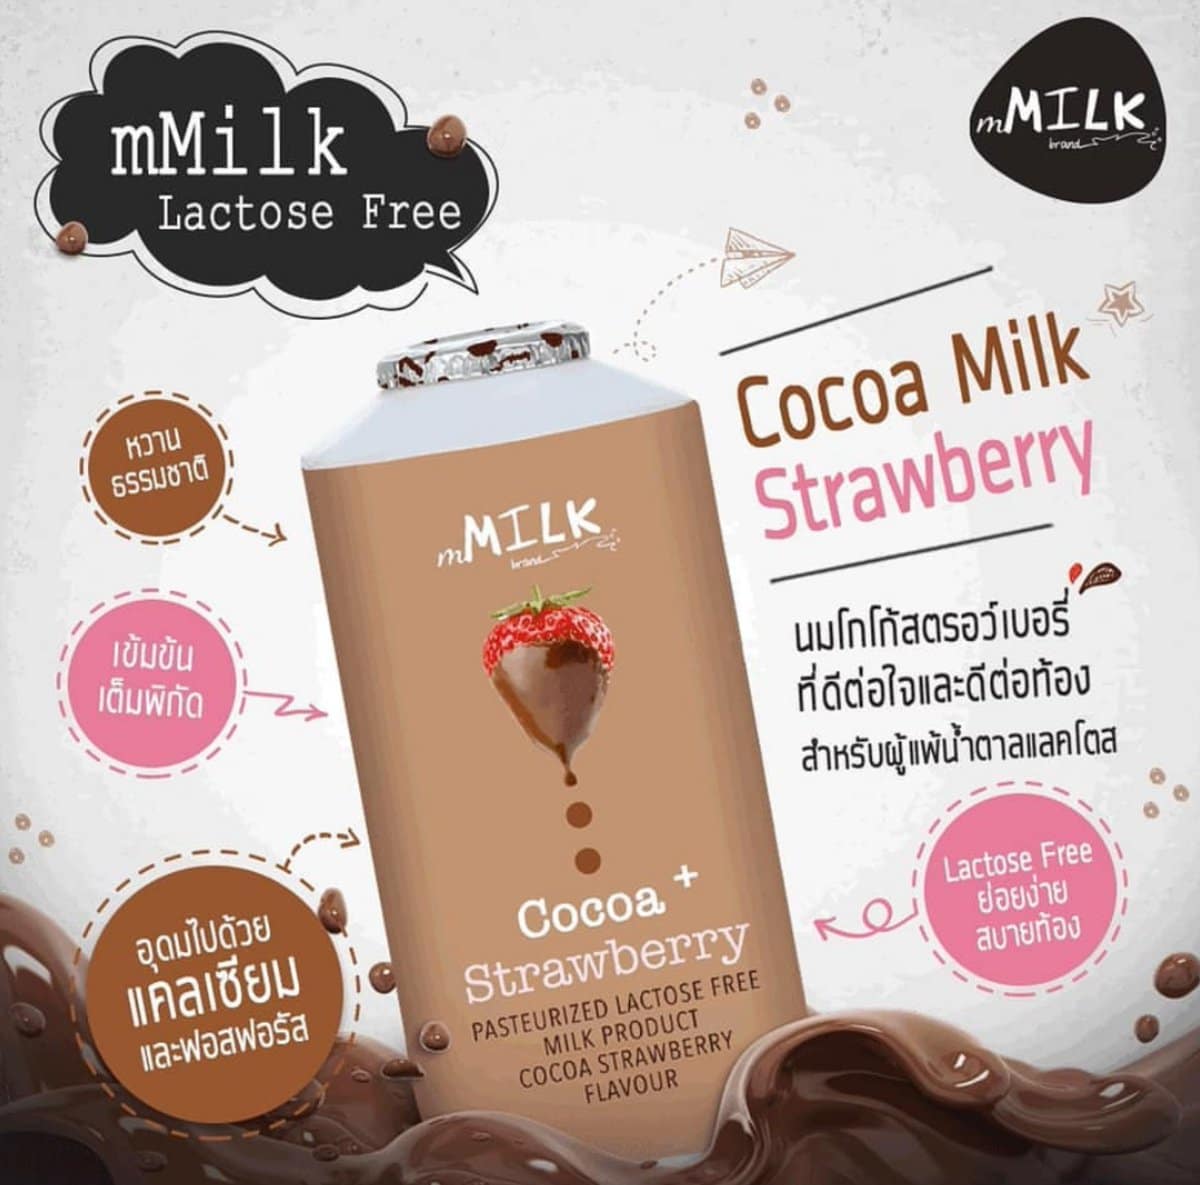 mMilk UHT Milk Lactose free Cocoa Strawberry Flavour 180ml.×2เอ็มมิลค์ นมยูเอชทีรสโกโก้สตรอเบอร์รี่ 180มล.× 1